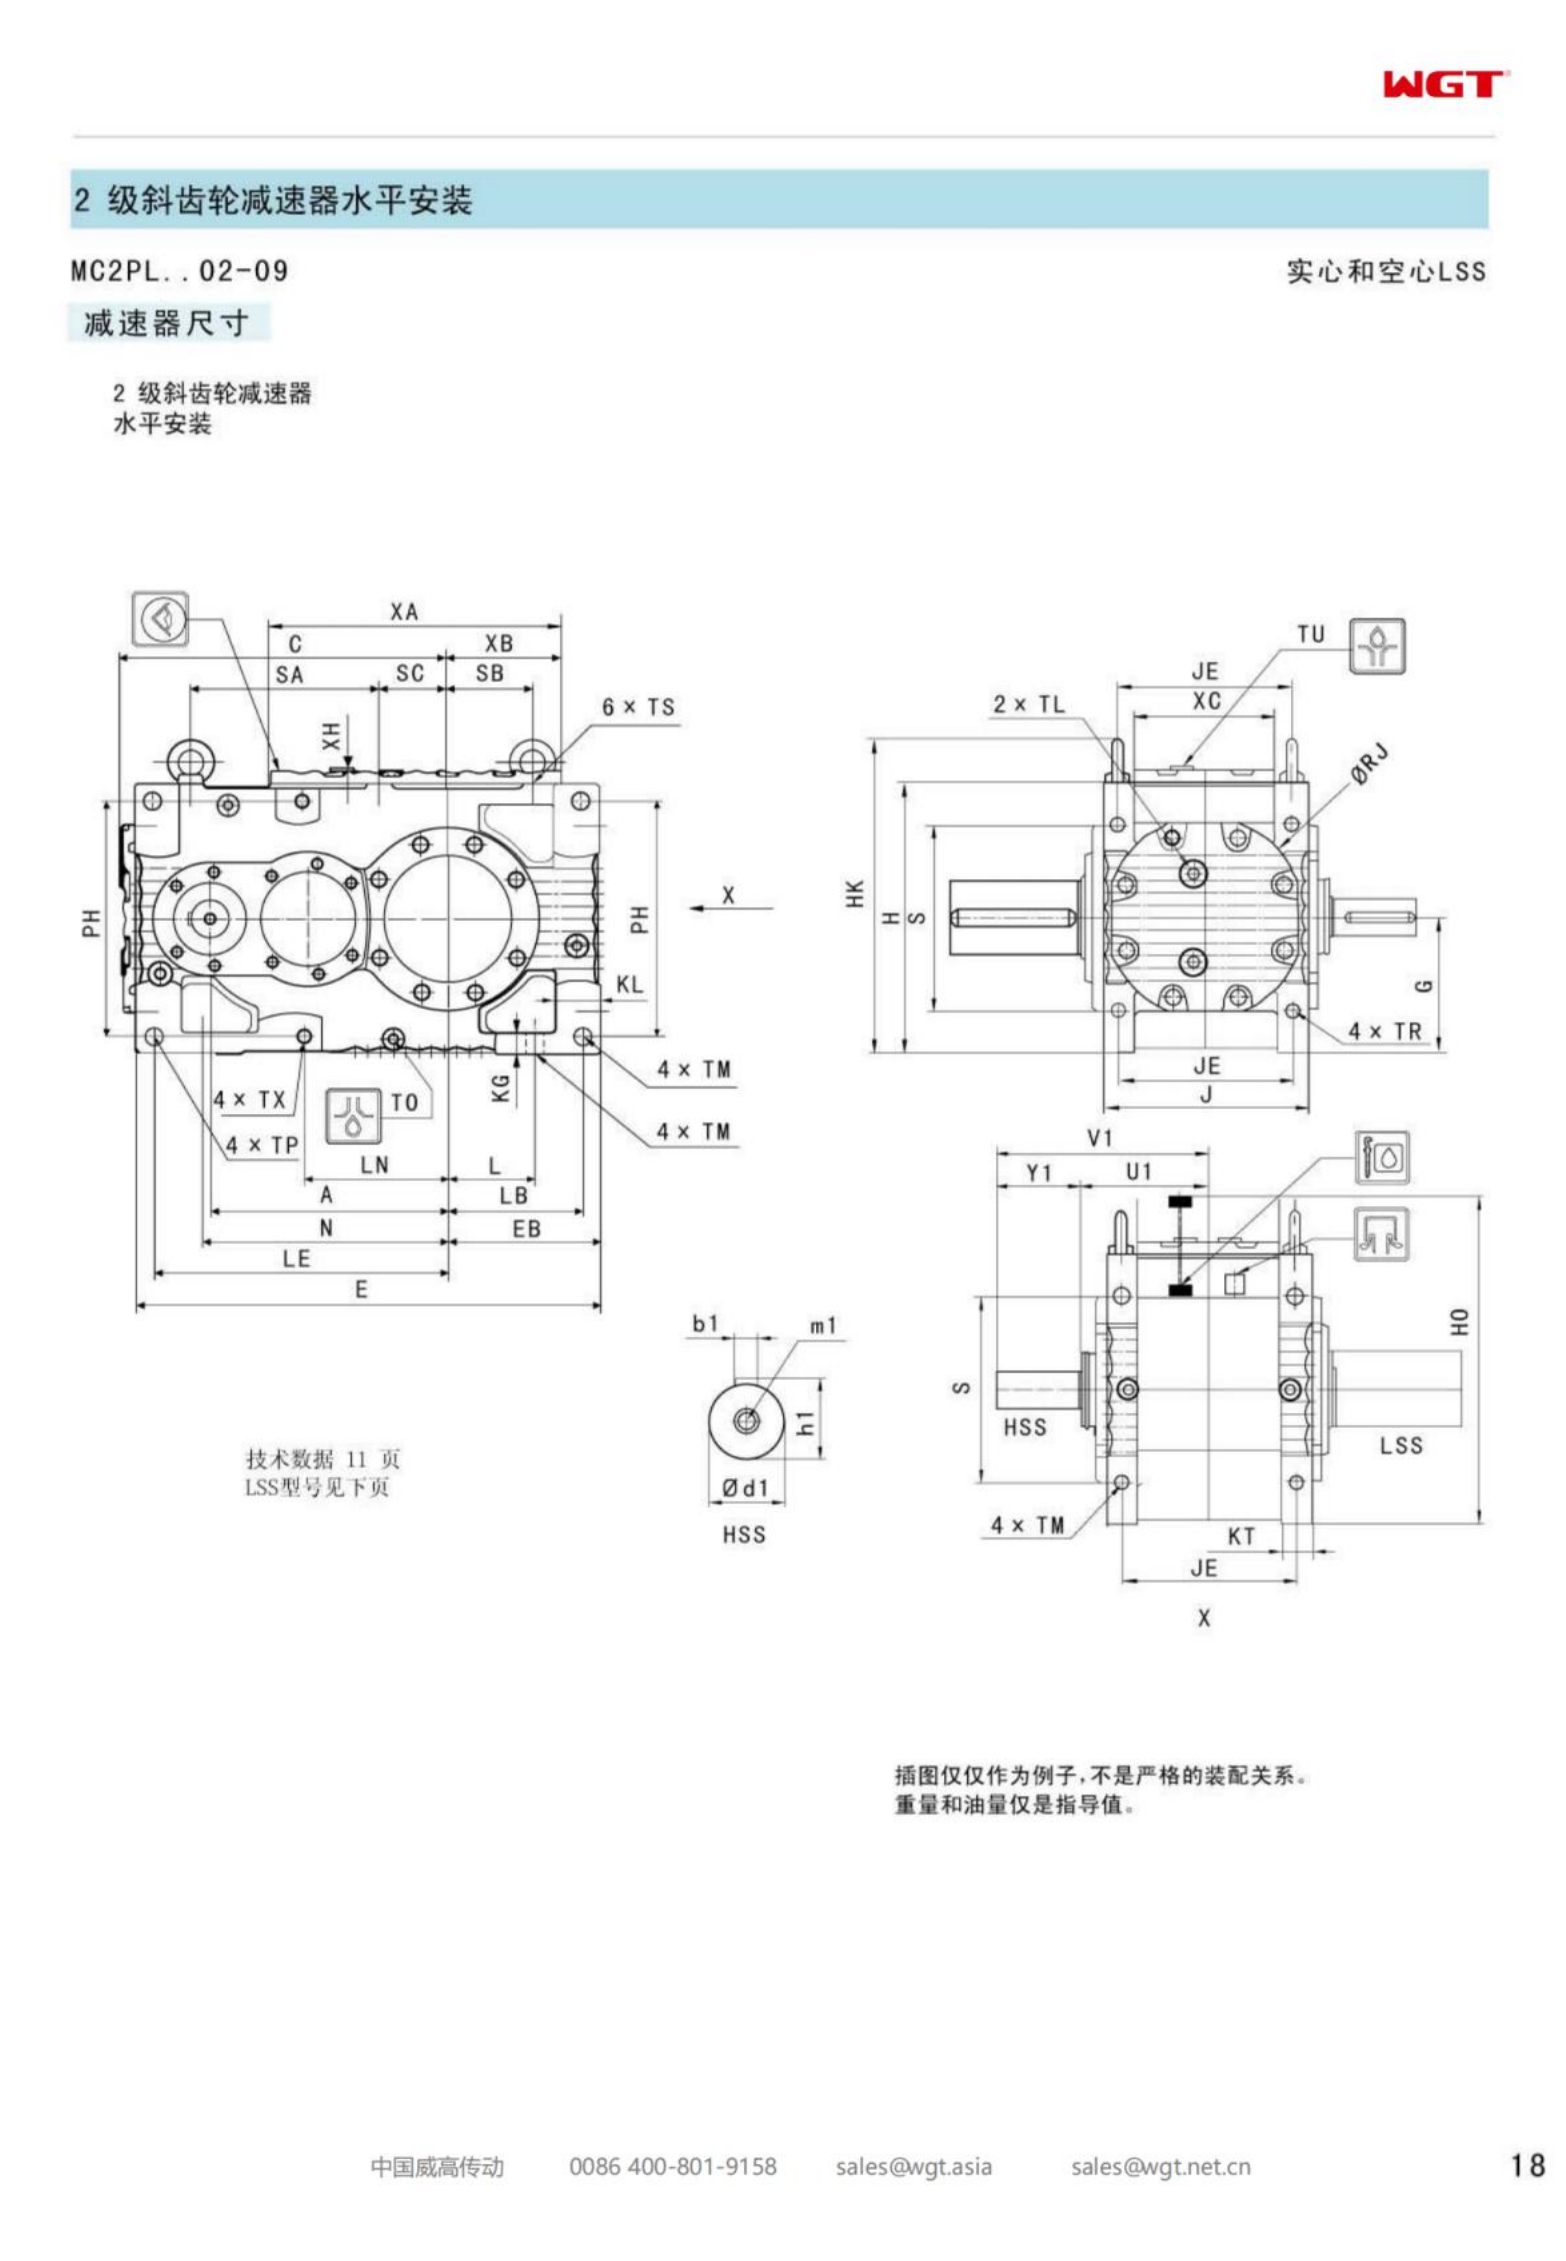 MC2PLST07 replaces _SEW_MC_Series gearbox (patent)